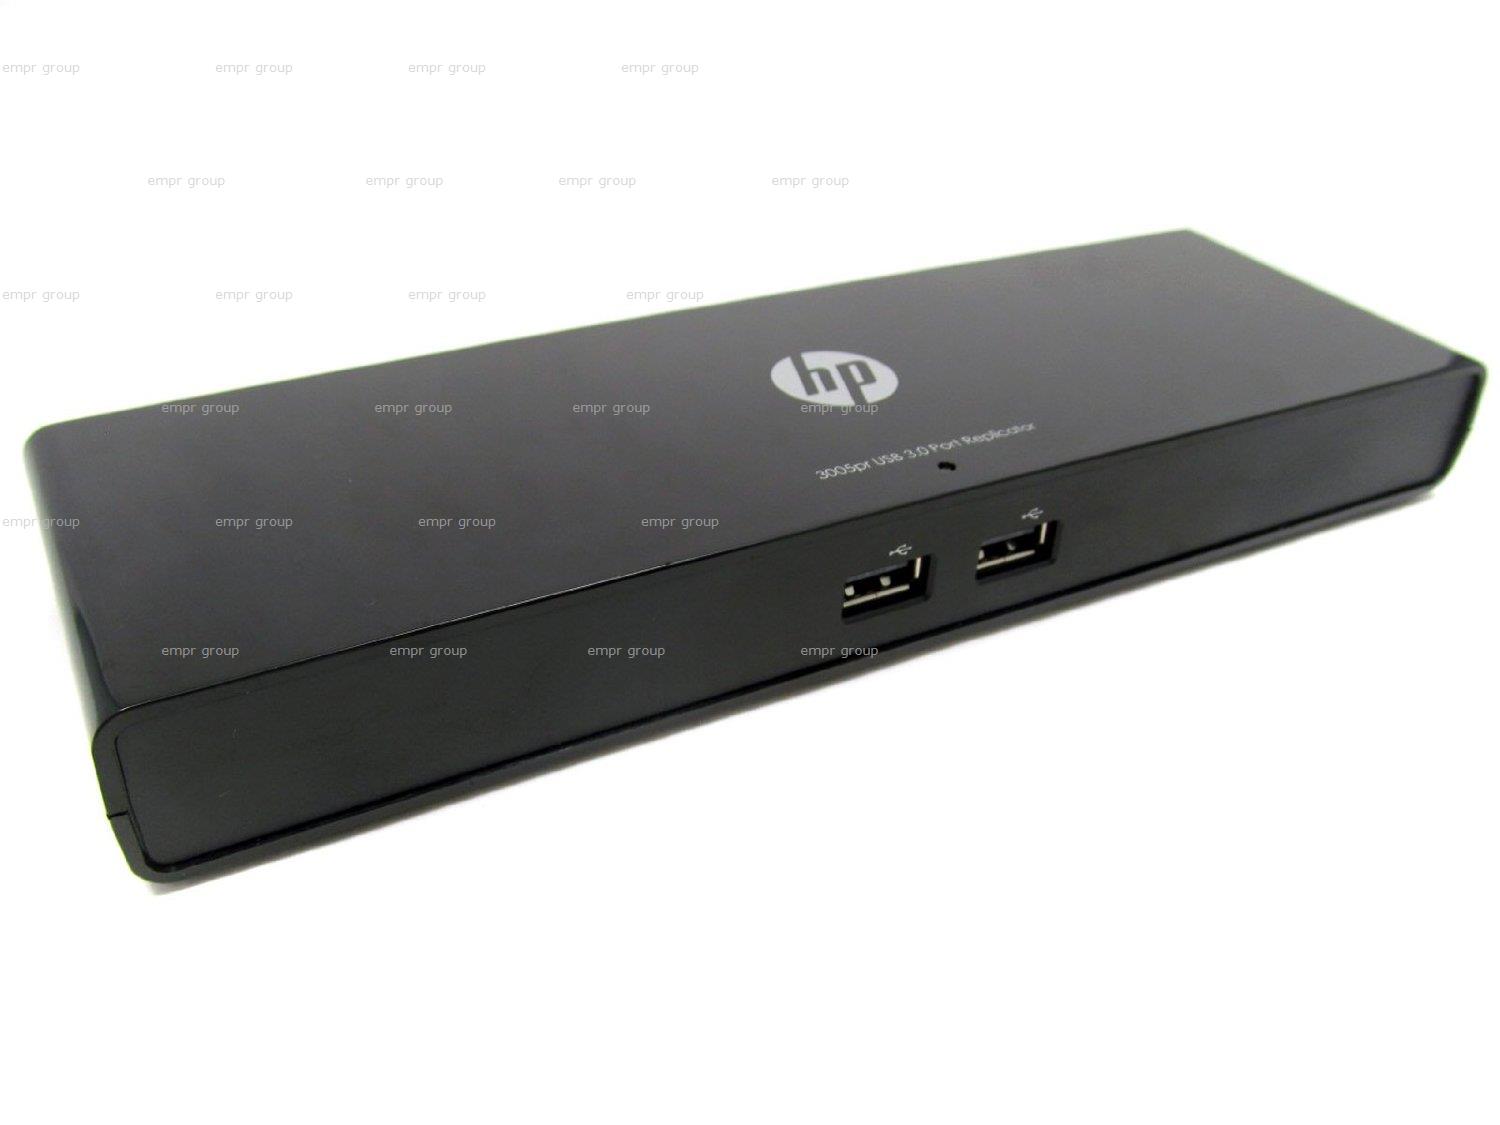 HP ProBook 450 G4 Laptop (Y8A26EA) Port Replicator 690650-001